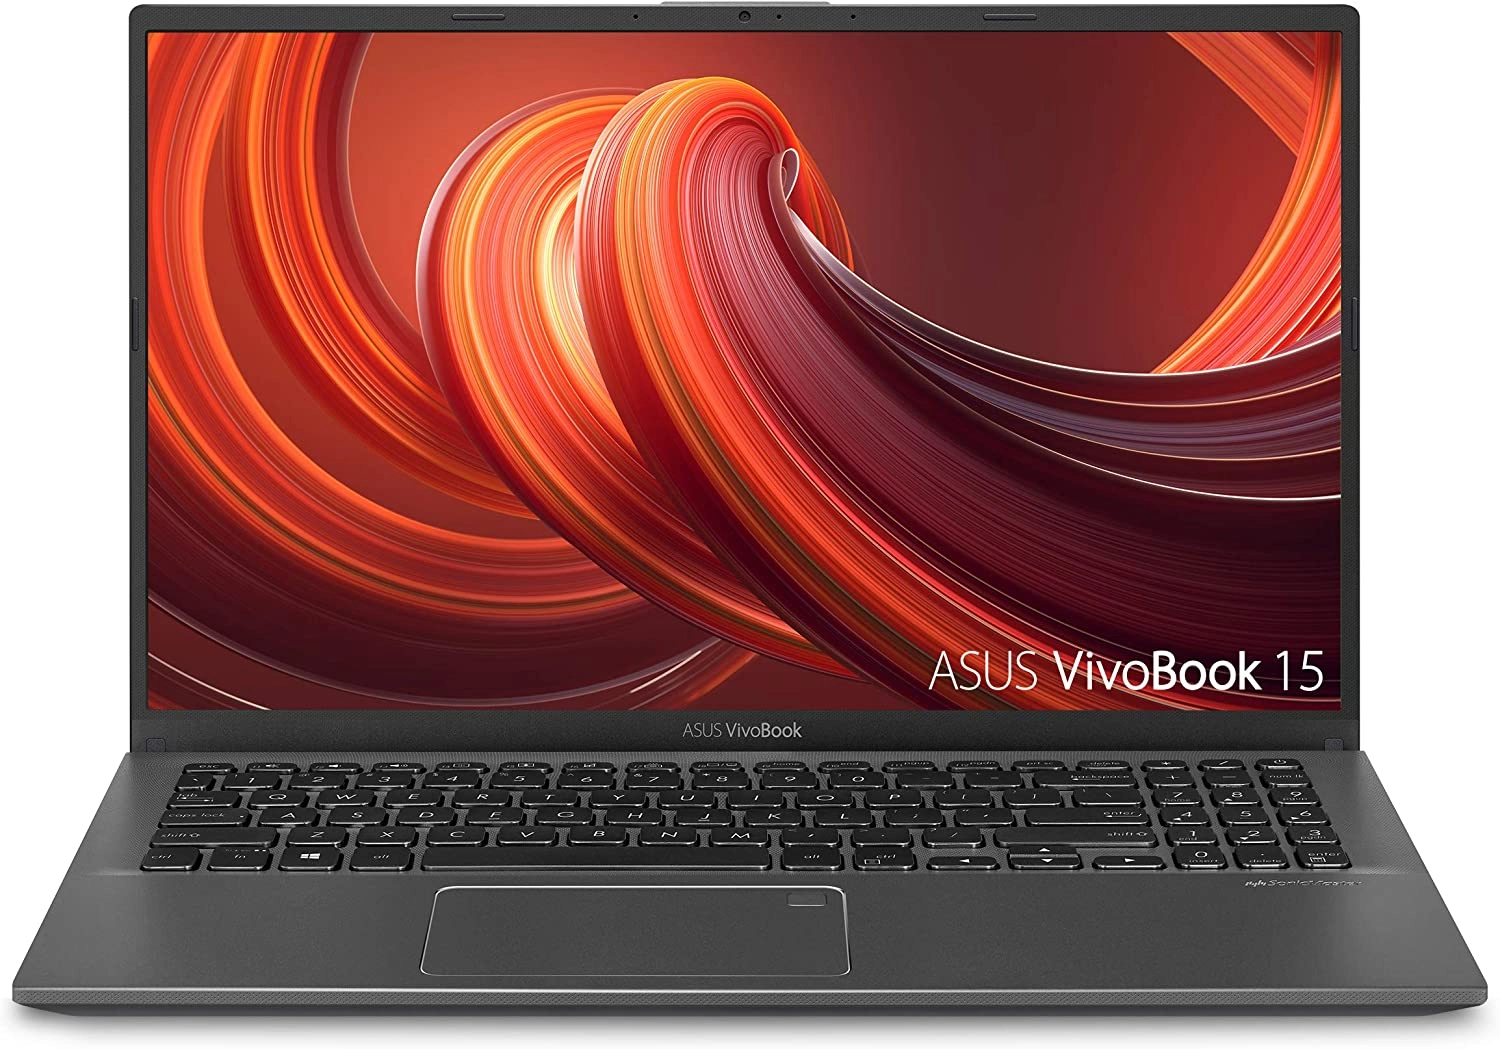 Asus VivoBook 15 laptop image